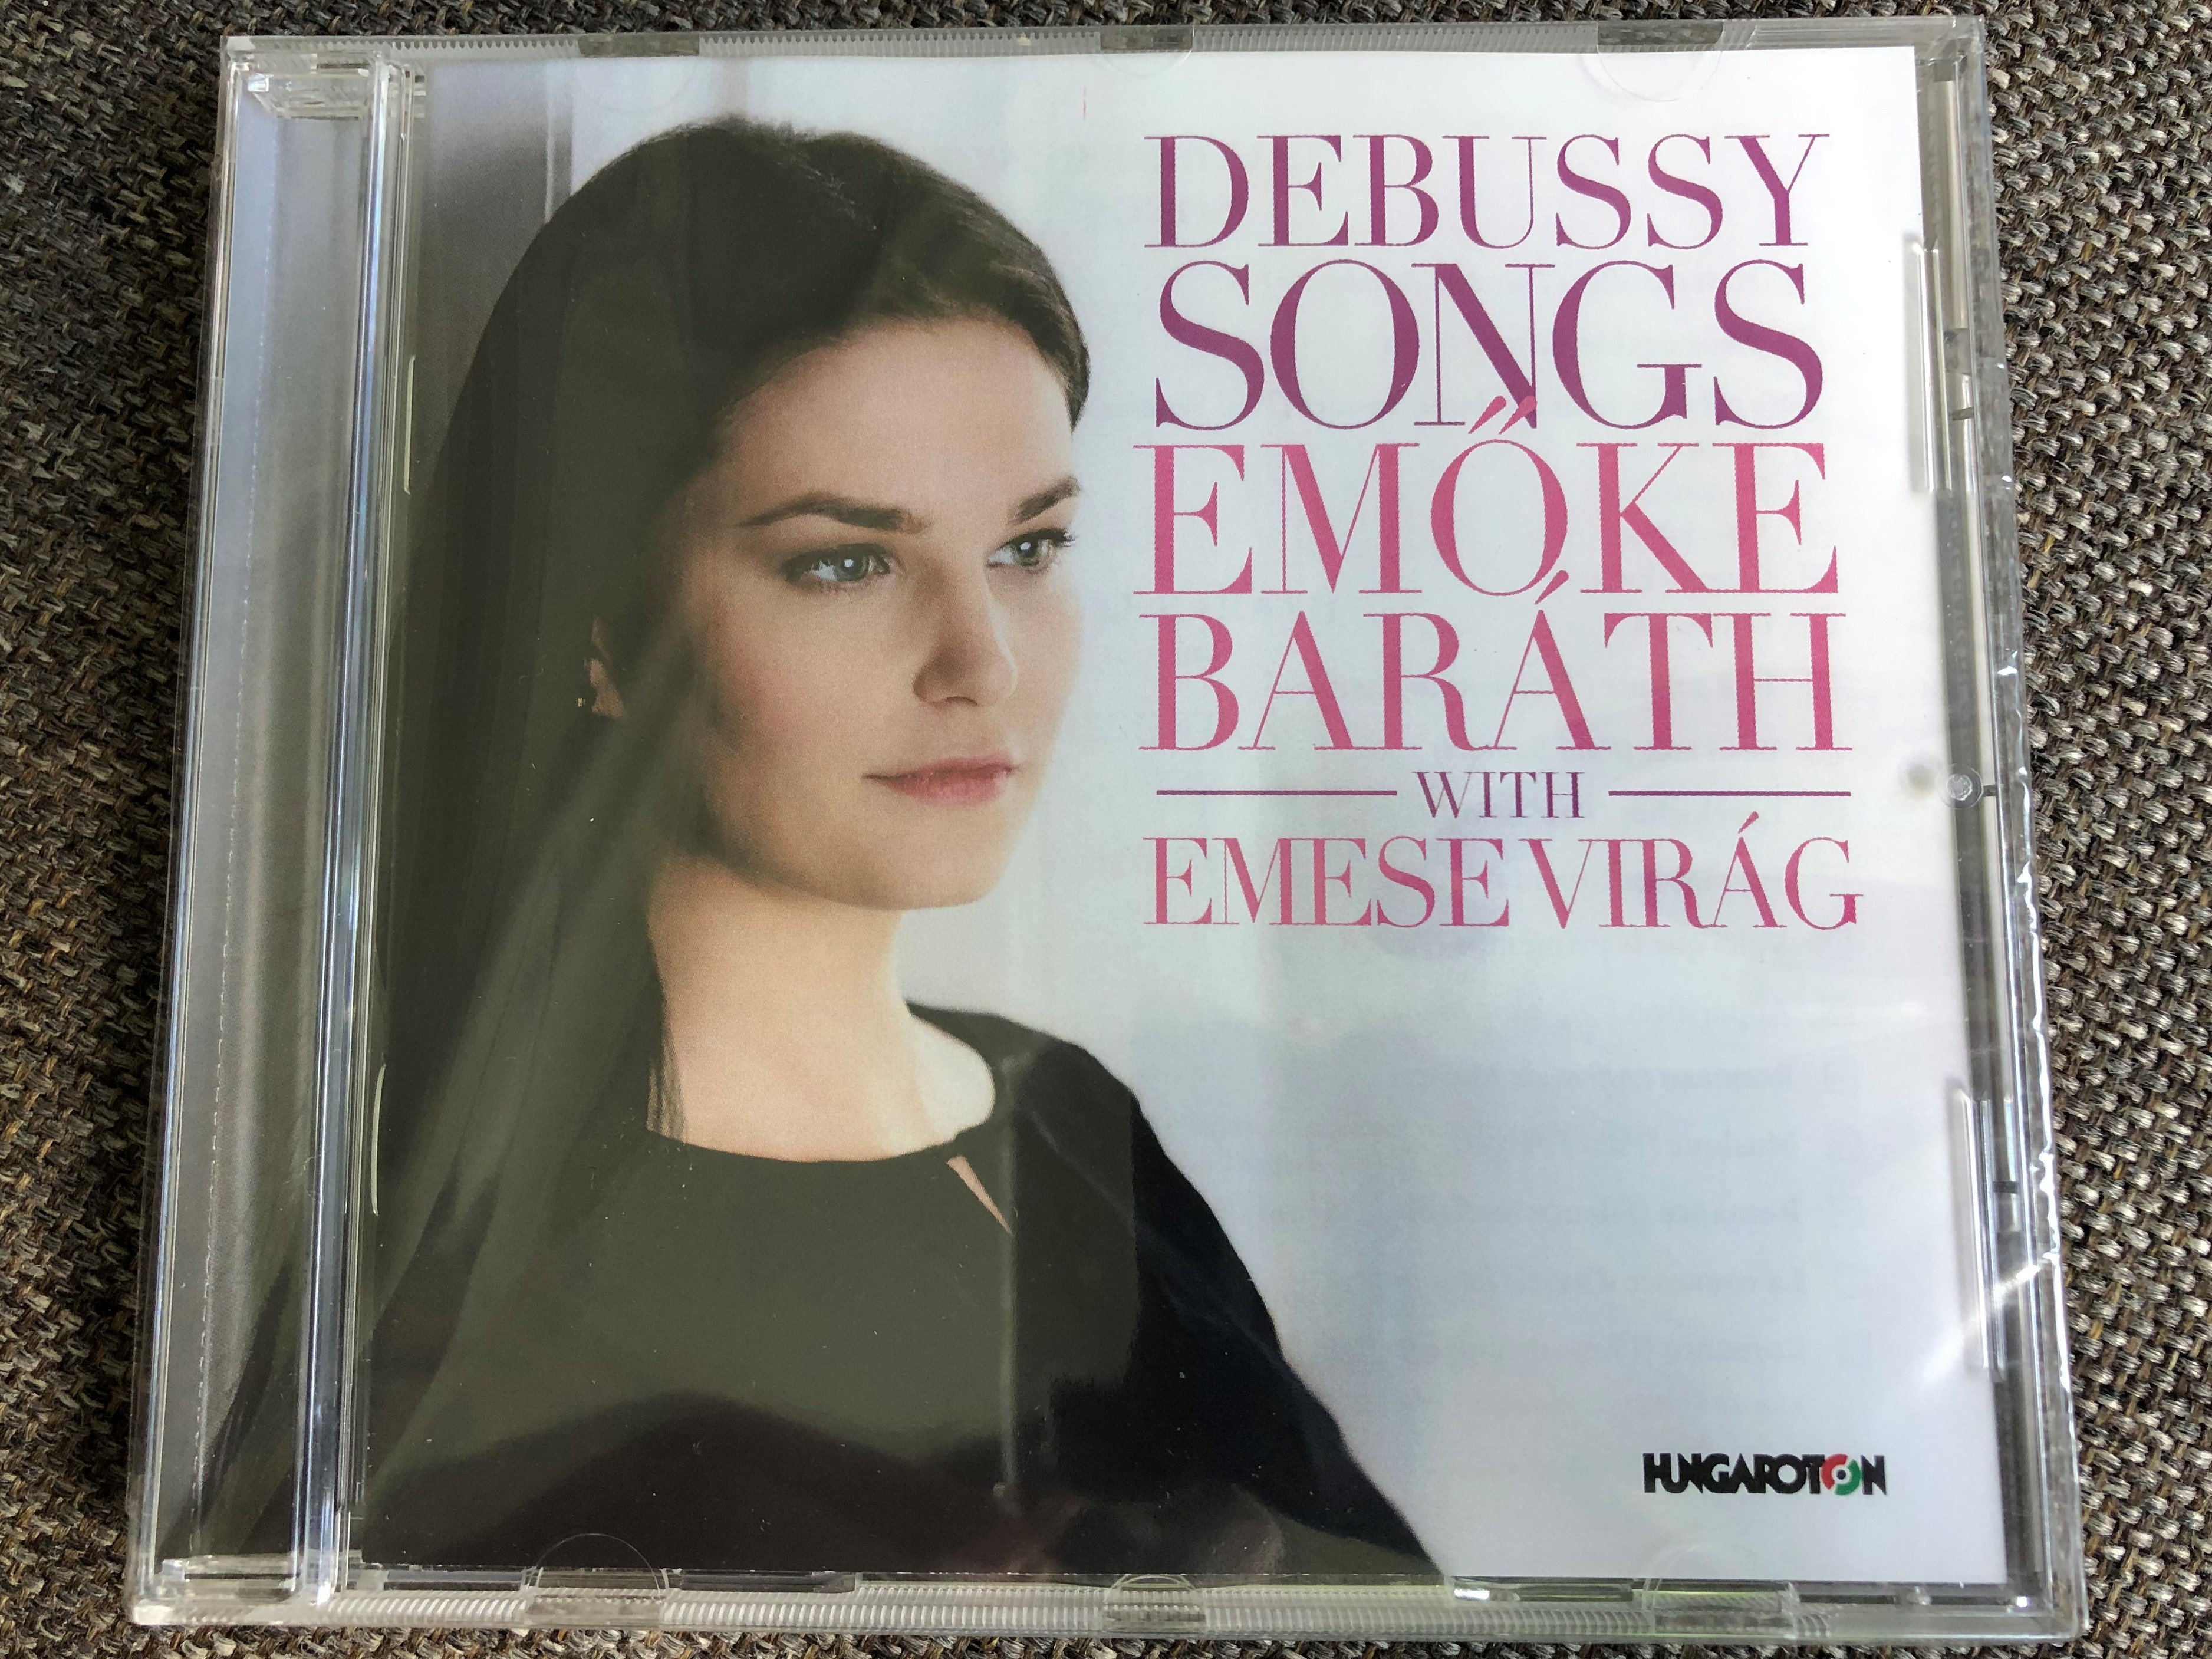 debussy-songs-em-ke-barath-with-emese-vir-g-hungaroton-audio-cd-2017-hcd-32795-1-.jpg